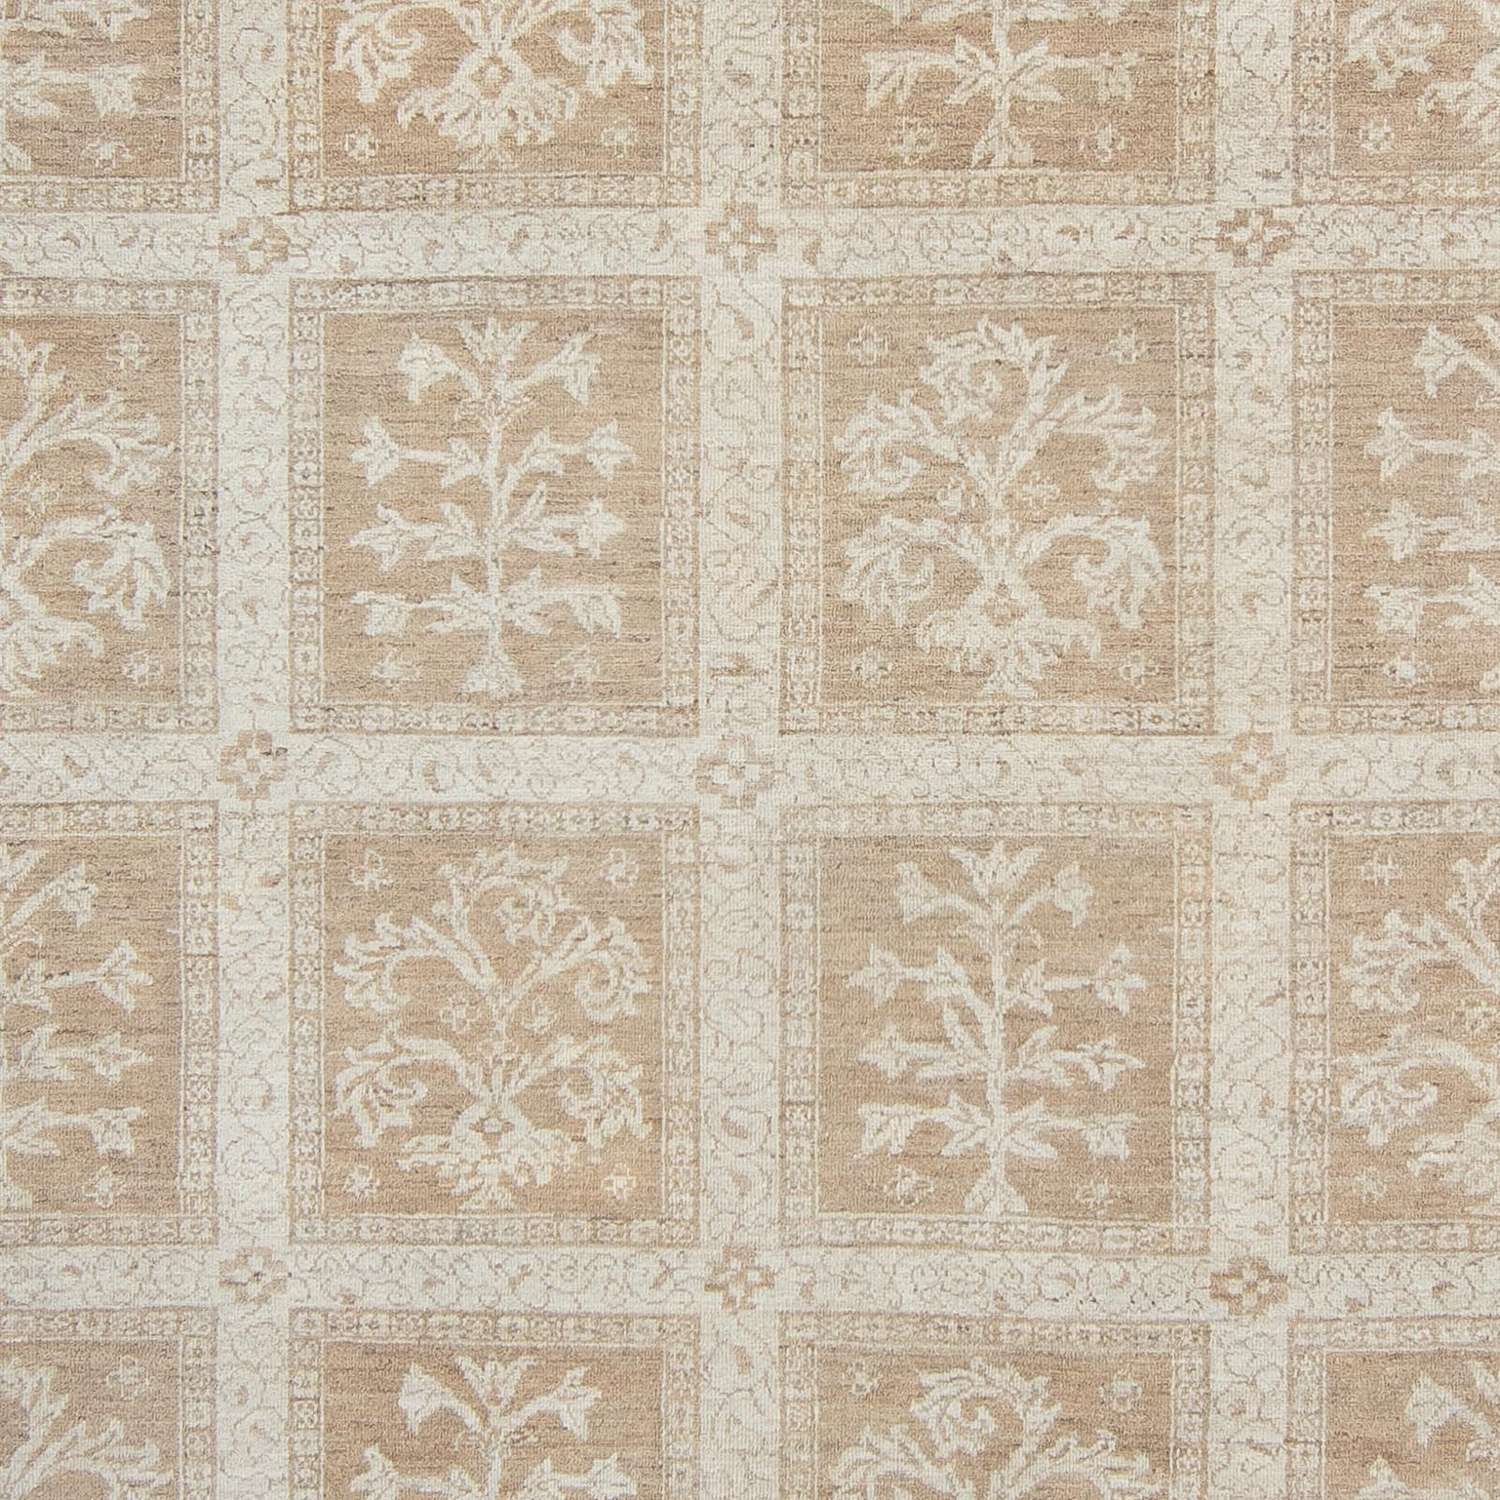 Zieglerův koberec - 346 x 245 cm - béžová